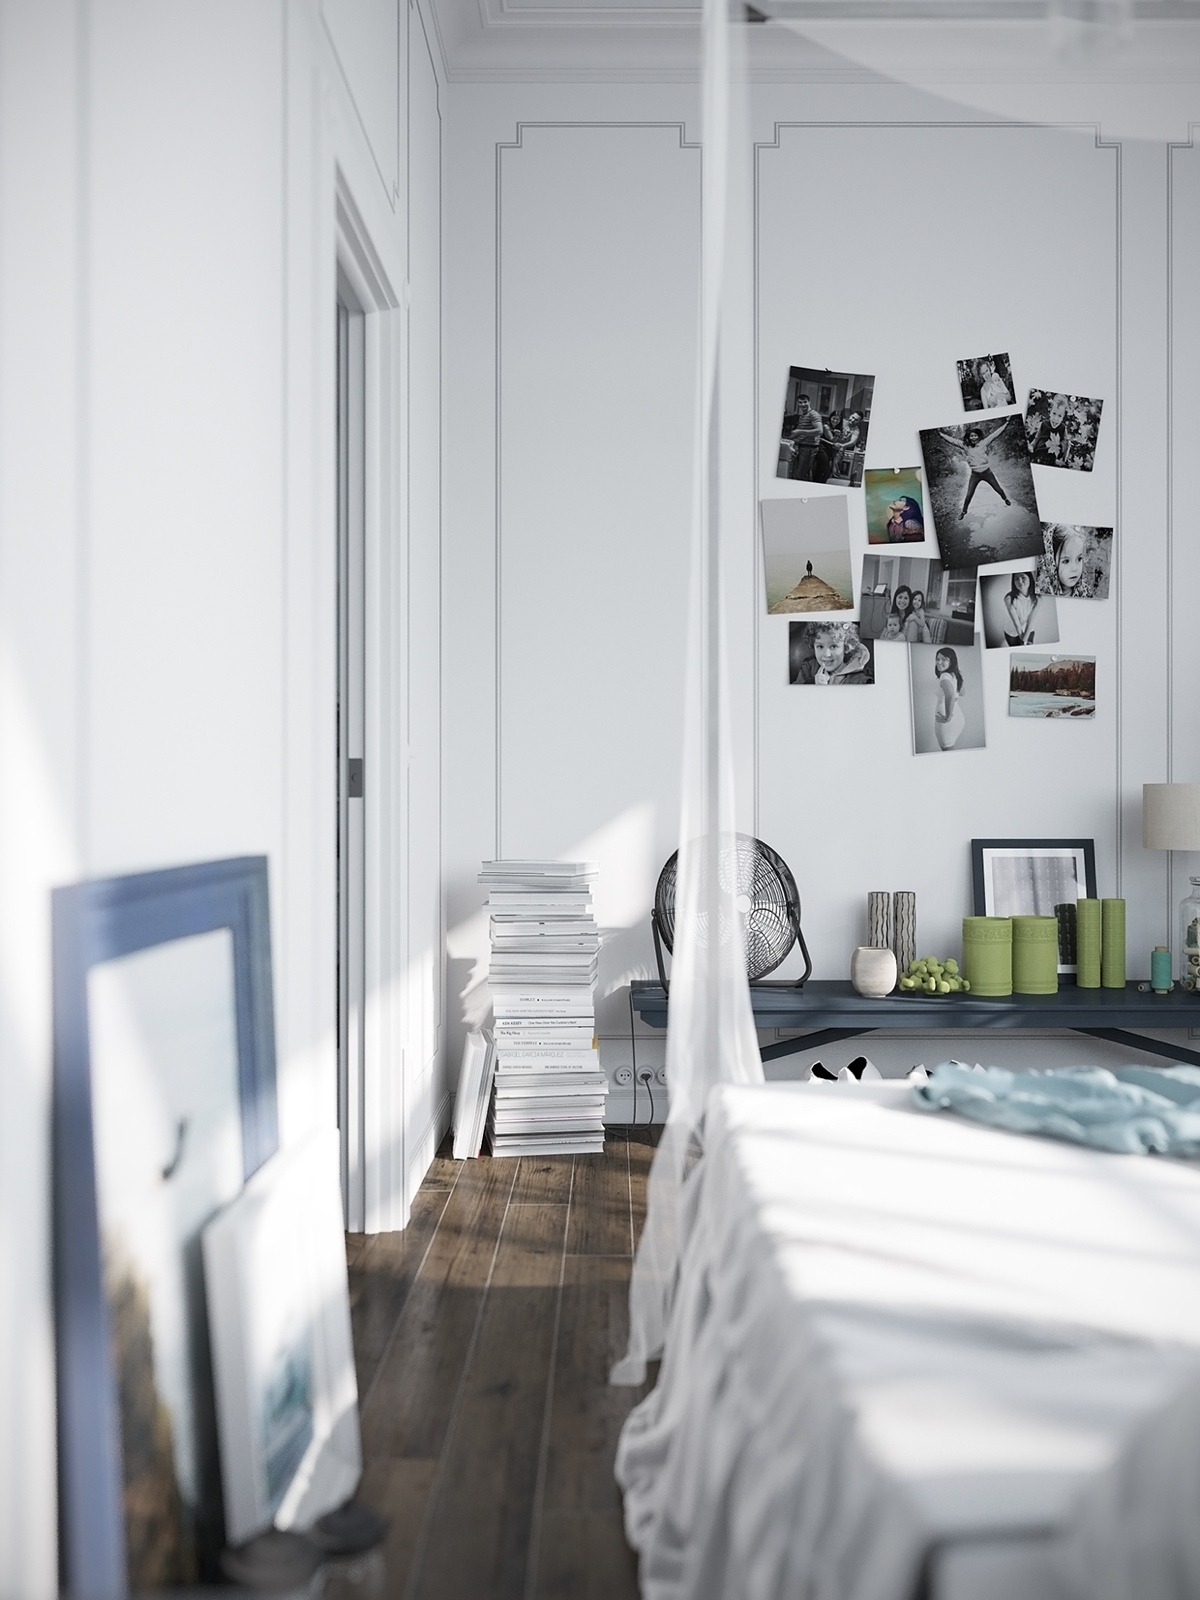 Scandinavian decor "width =" 1200 "height =" 1600 "srcset =" https://mileray.com/wp-content/uploads/2020/05/1588511577_675_Scandinavian-Bedroom-Design-With-Beautiful-Accents-That-Perfect-For-Relaxation.jpg 1200w, https://mileray.com/wp -content / uploads / 2016/04 / bedroom-design1-225x300.jpg 225w, https://mileray.com/wp-content/uploads/2016/04/bedroom-design1-768x1024.jpg 768w, https: // myfashionos .com / wp-content / uploads / 2016/04 / bedroom-design1-696x928.jpg 696w, https://mileray.com/wp-content/uploads/2016/04/bedroom-design1-1068x1424.jpg 1068w, https : //mileray.com/wp-content/uploads/2016/04/bedroom-design1-315x420.jpg 315w "Sizes =" (maximum width: 1200px) 100vw, 1200px